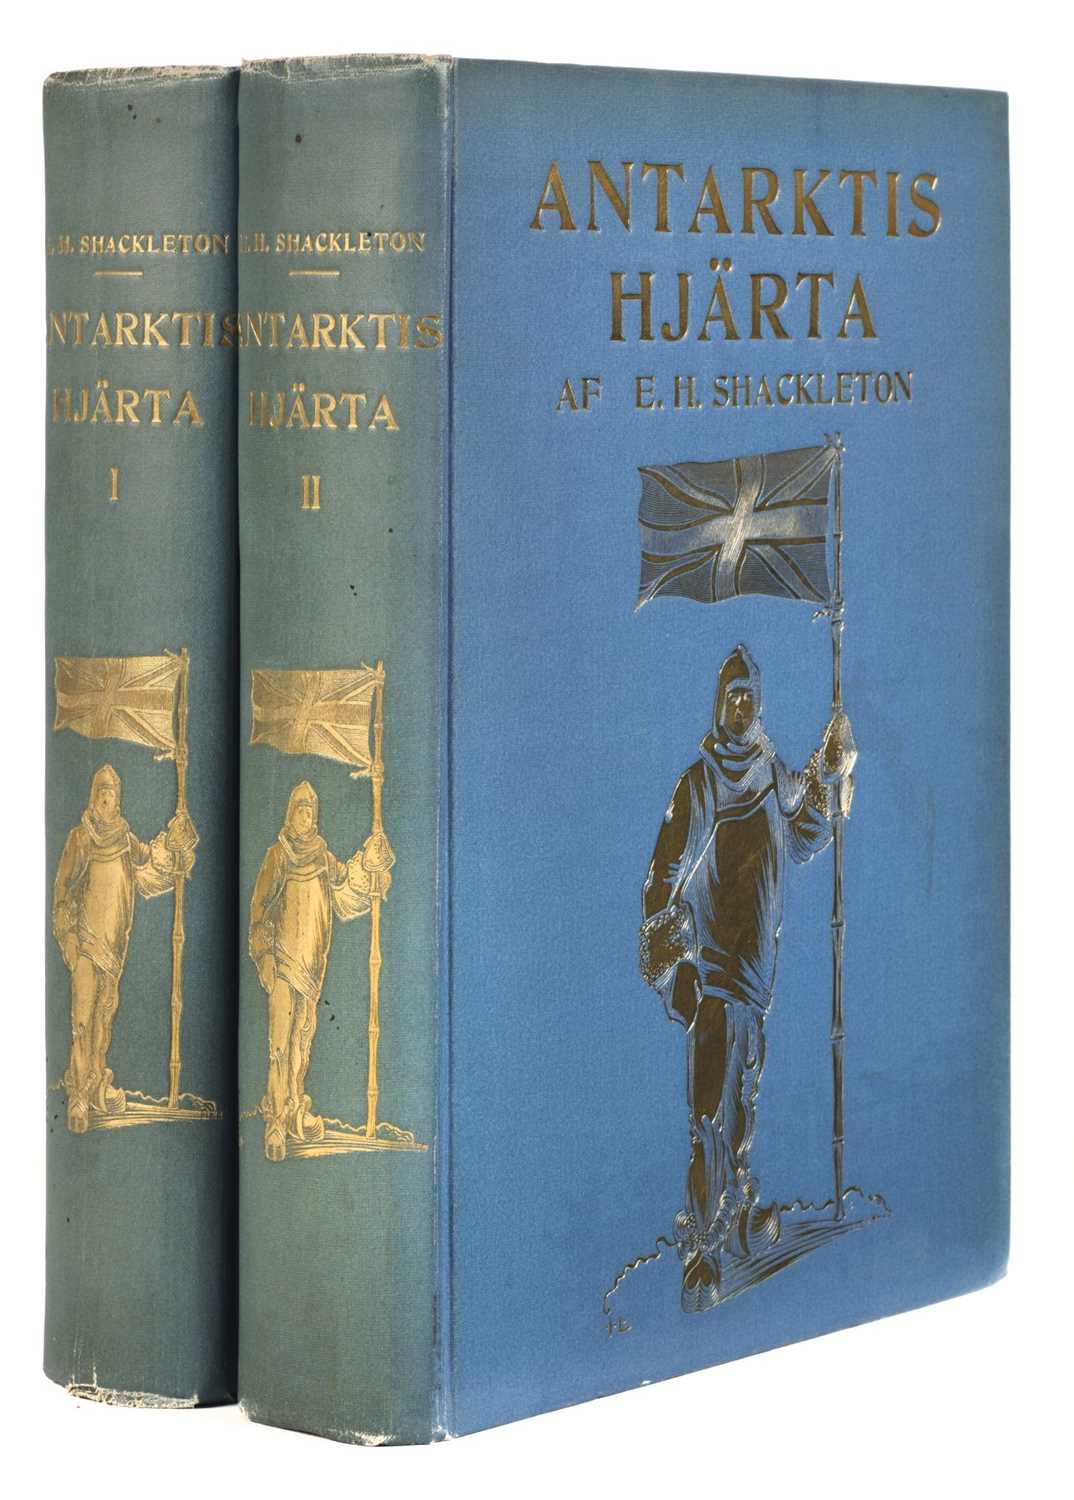 Lot 32 - Shackleton (Ernest H.). Antarktis' Hjärta [The Heart of the Antarctic], 1st edition in Swedish, 1910